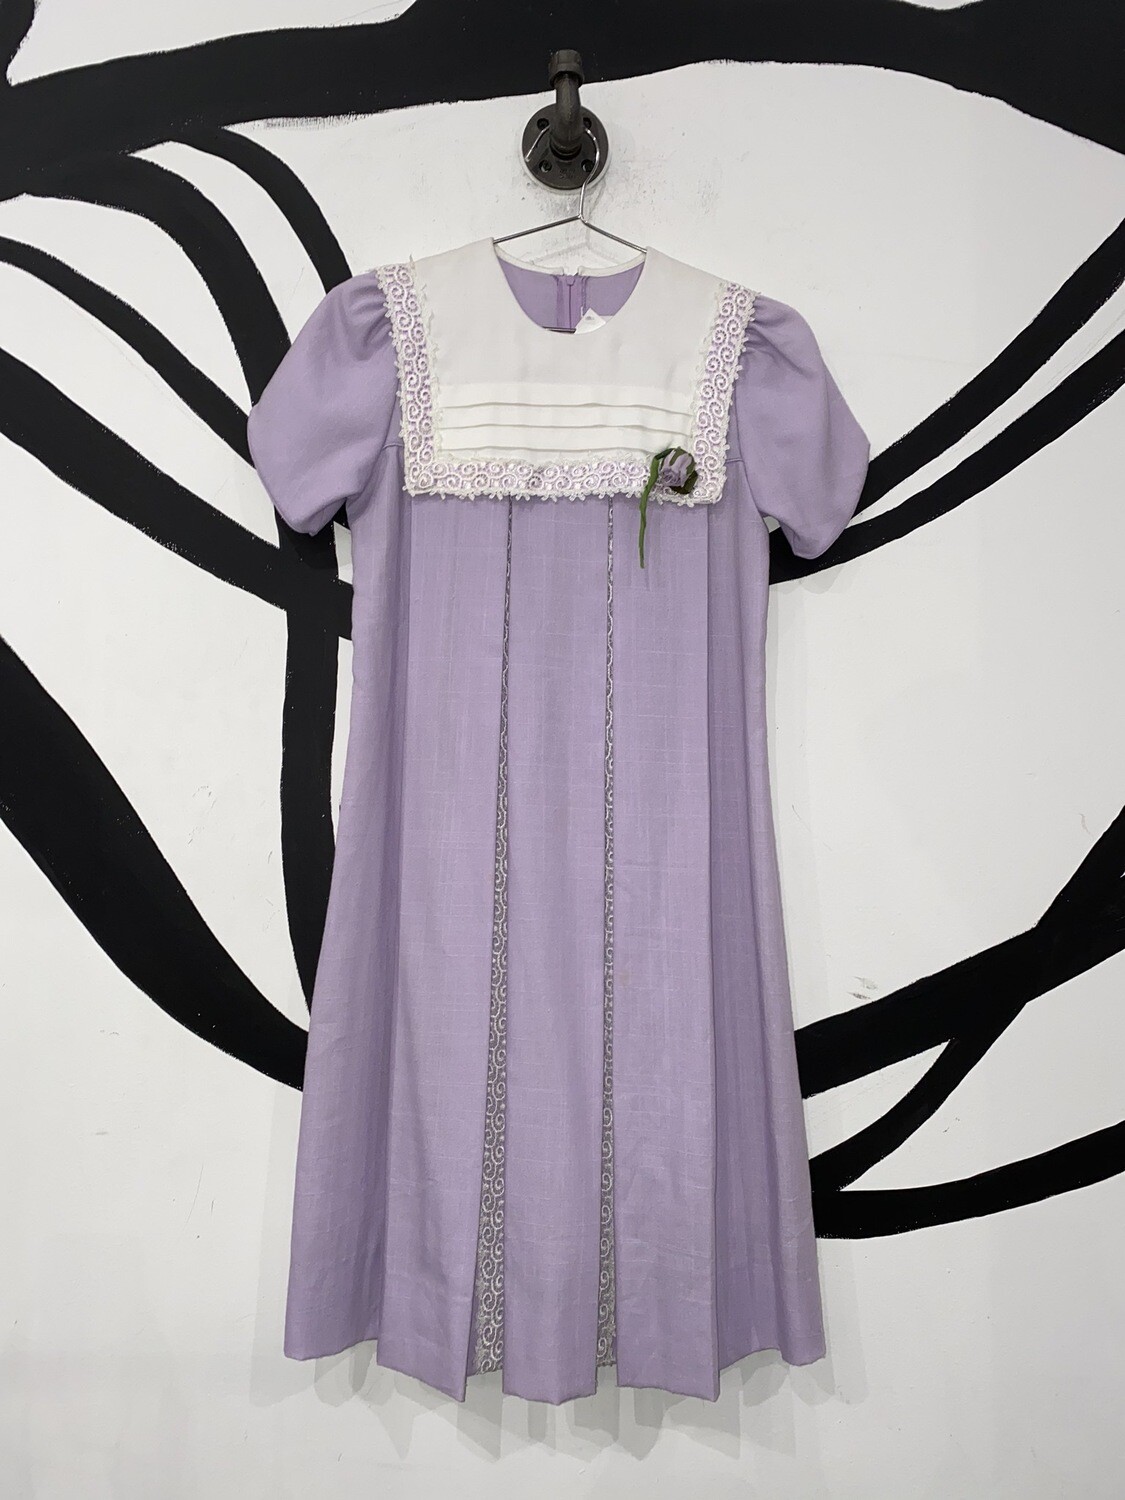 Sweet Lace Collared Purple Dress Size L